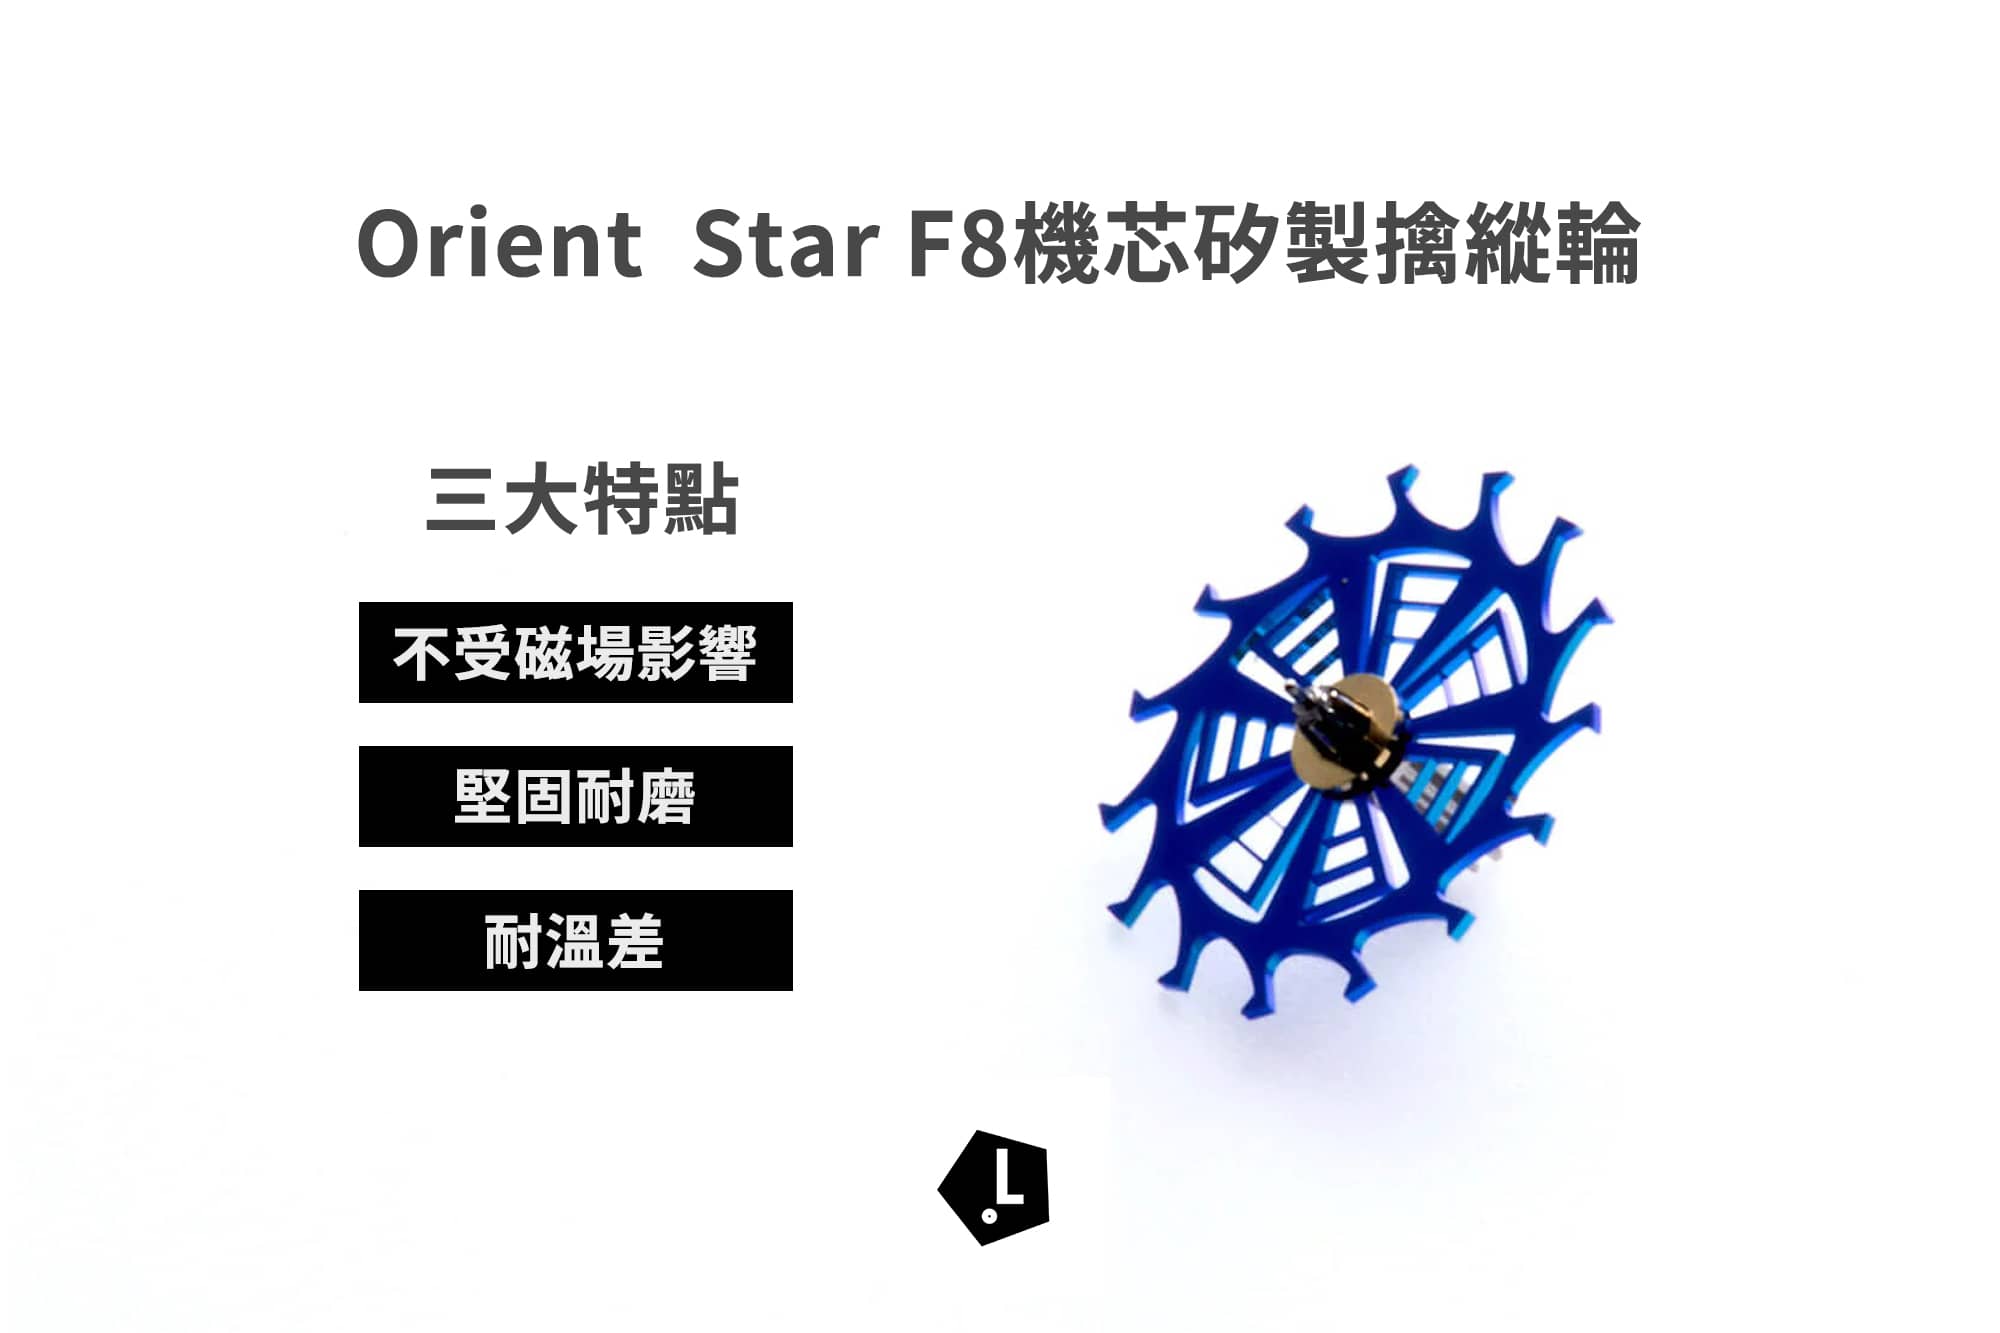 Orient Star F8機芯矽製擒縱輪介紹